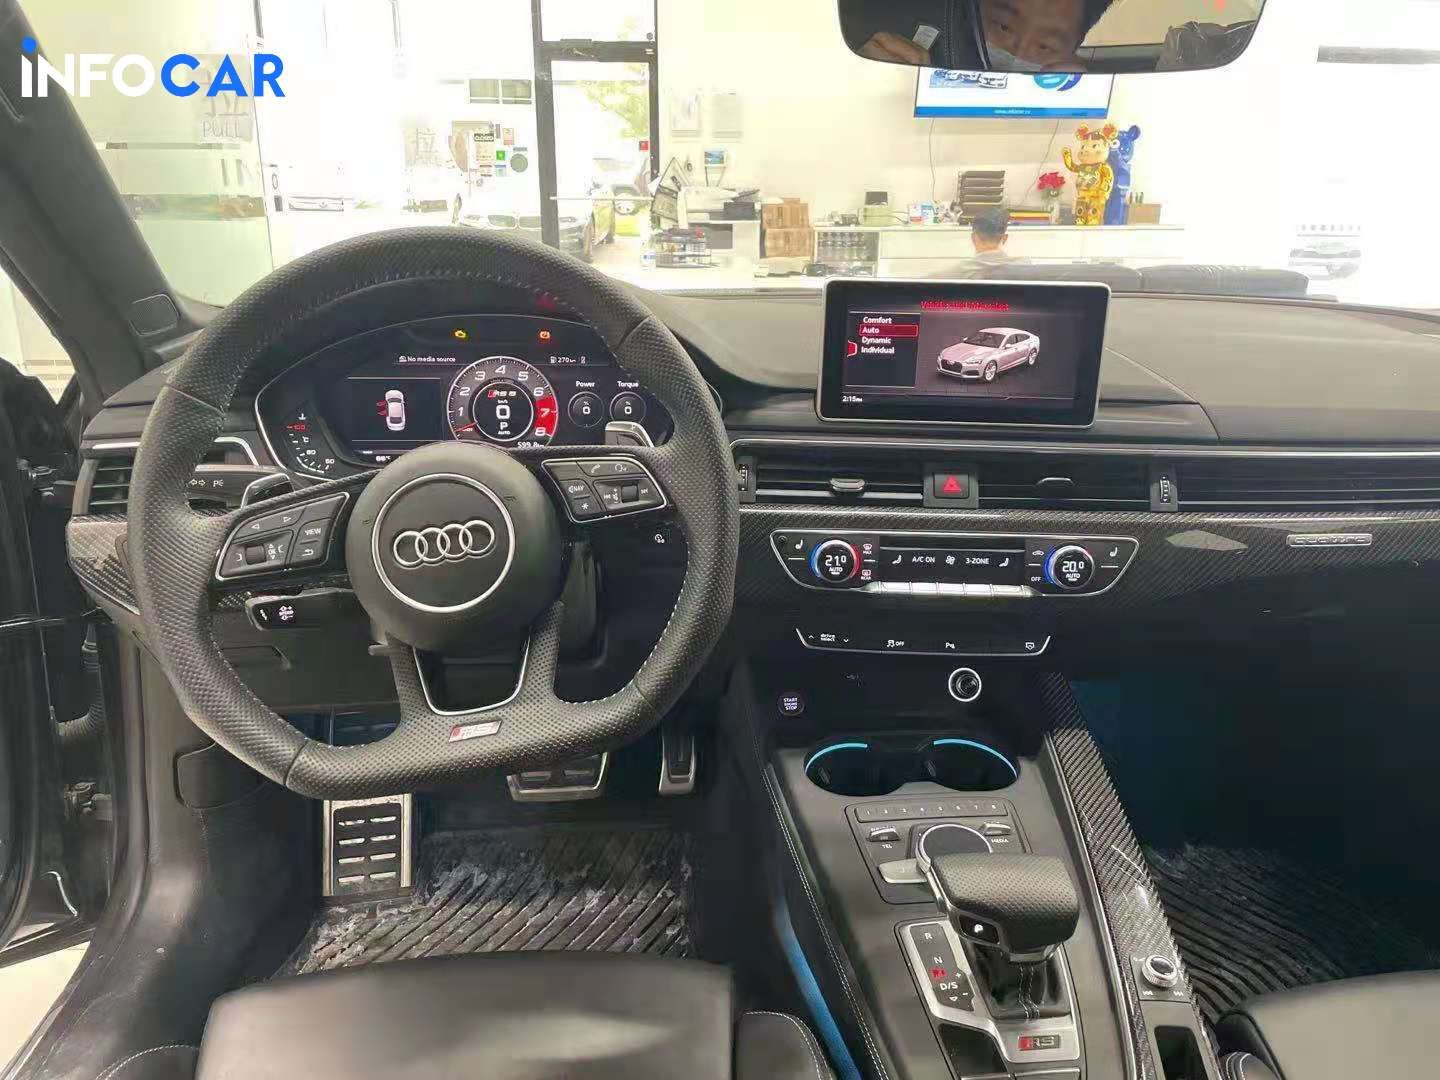 2019 Audi RS 5 SPORTBACK - INFOCAR - Toronto Auto Trading Platform